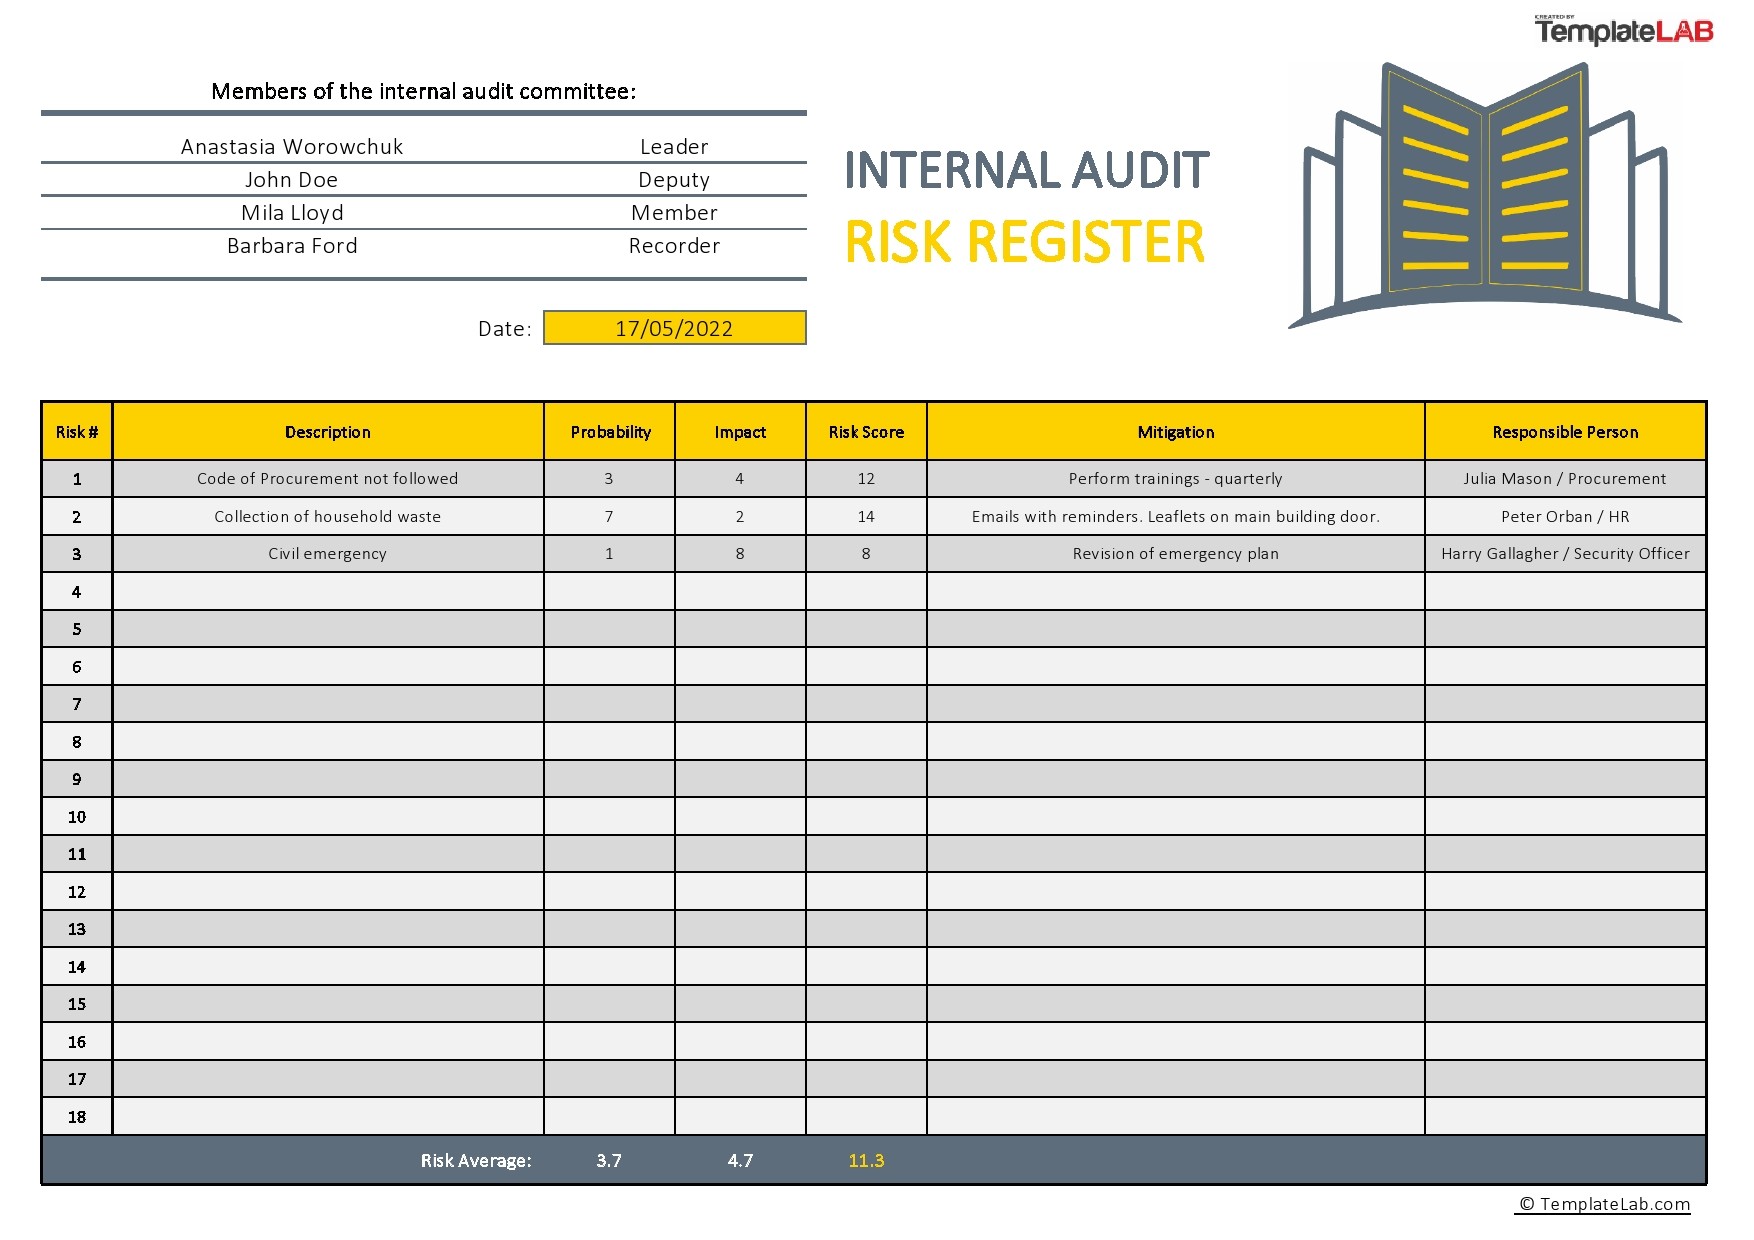 Free Internal Audit Risk Register Template - TemplateLab.com